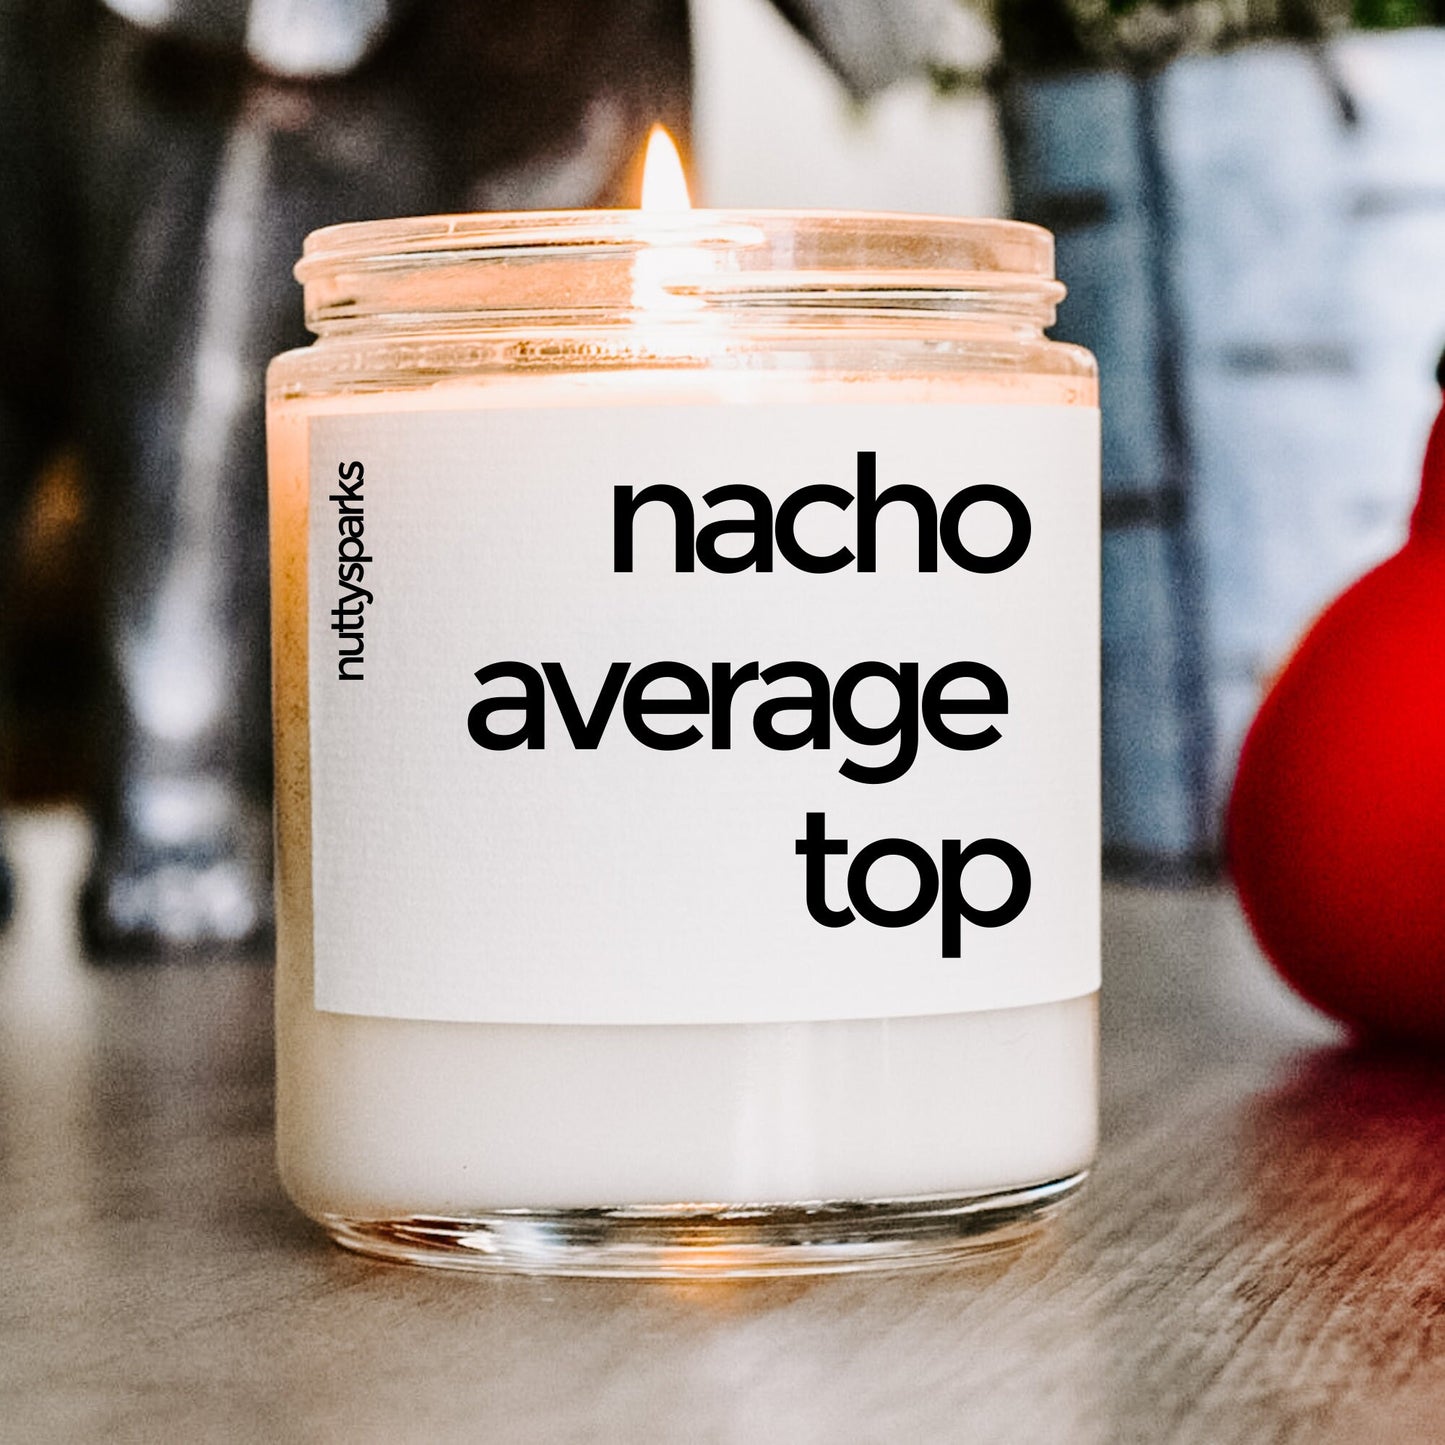 nacho average top